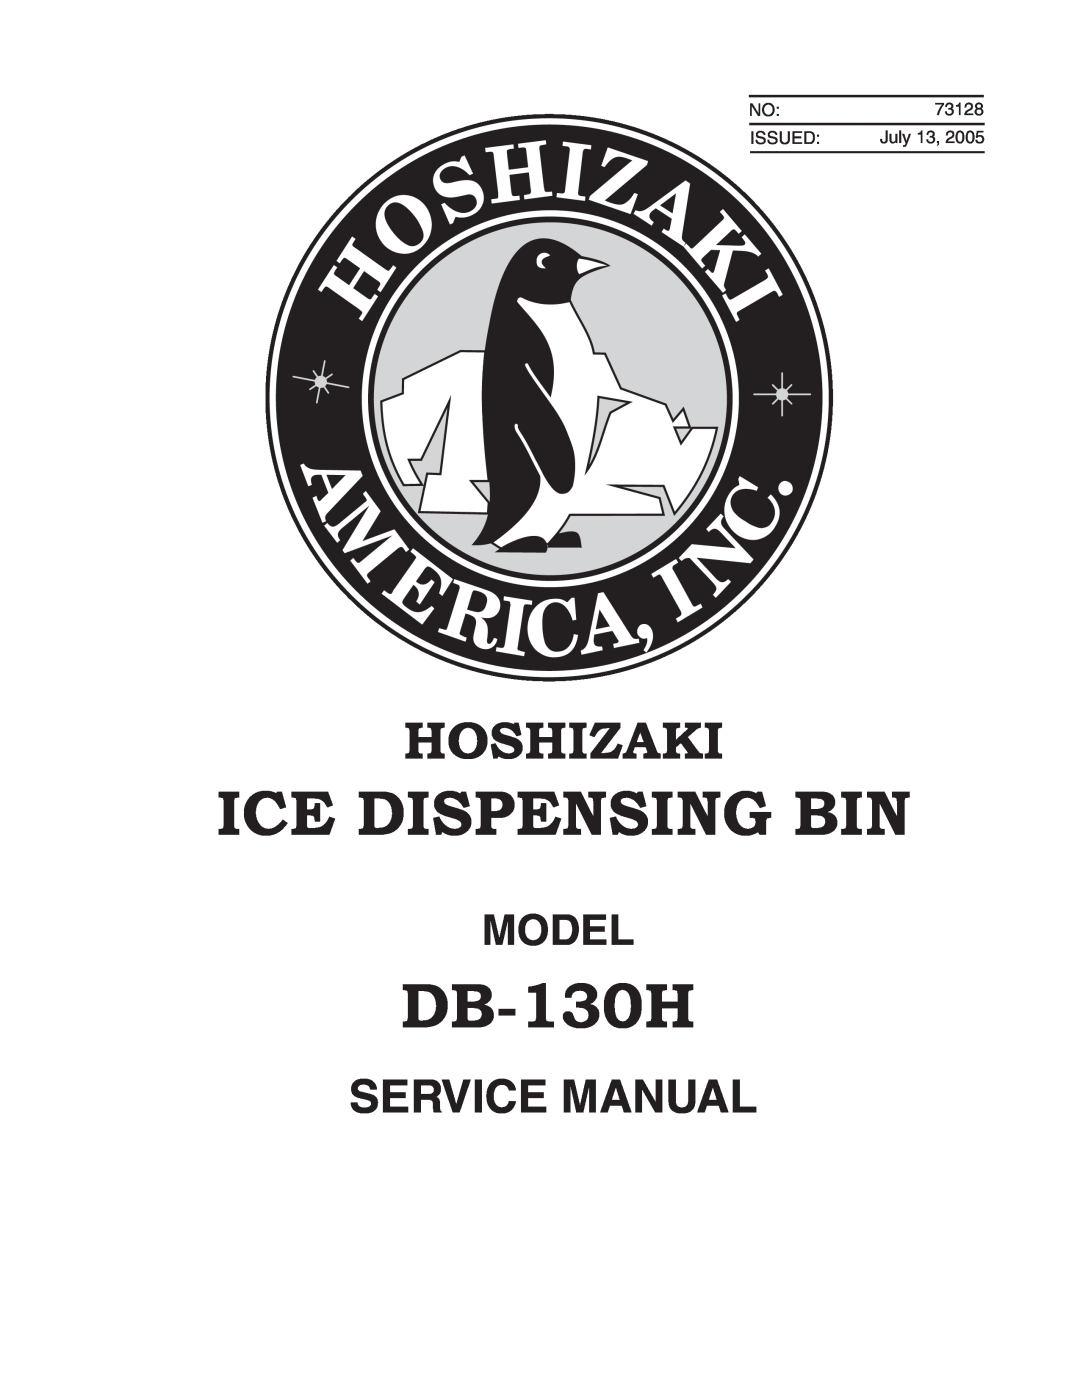 Hoshizaki DB-130H service manual Ice Dispensing Bin, Hoshizaki, Model 